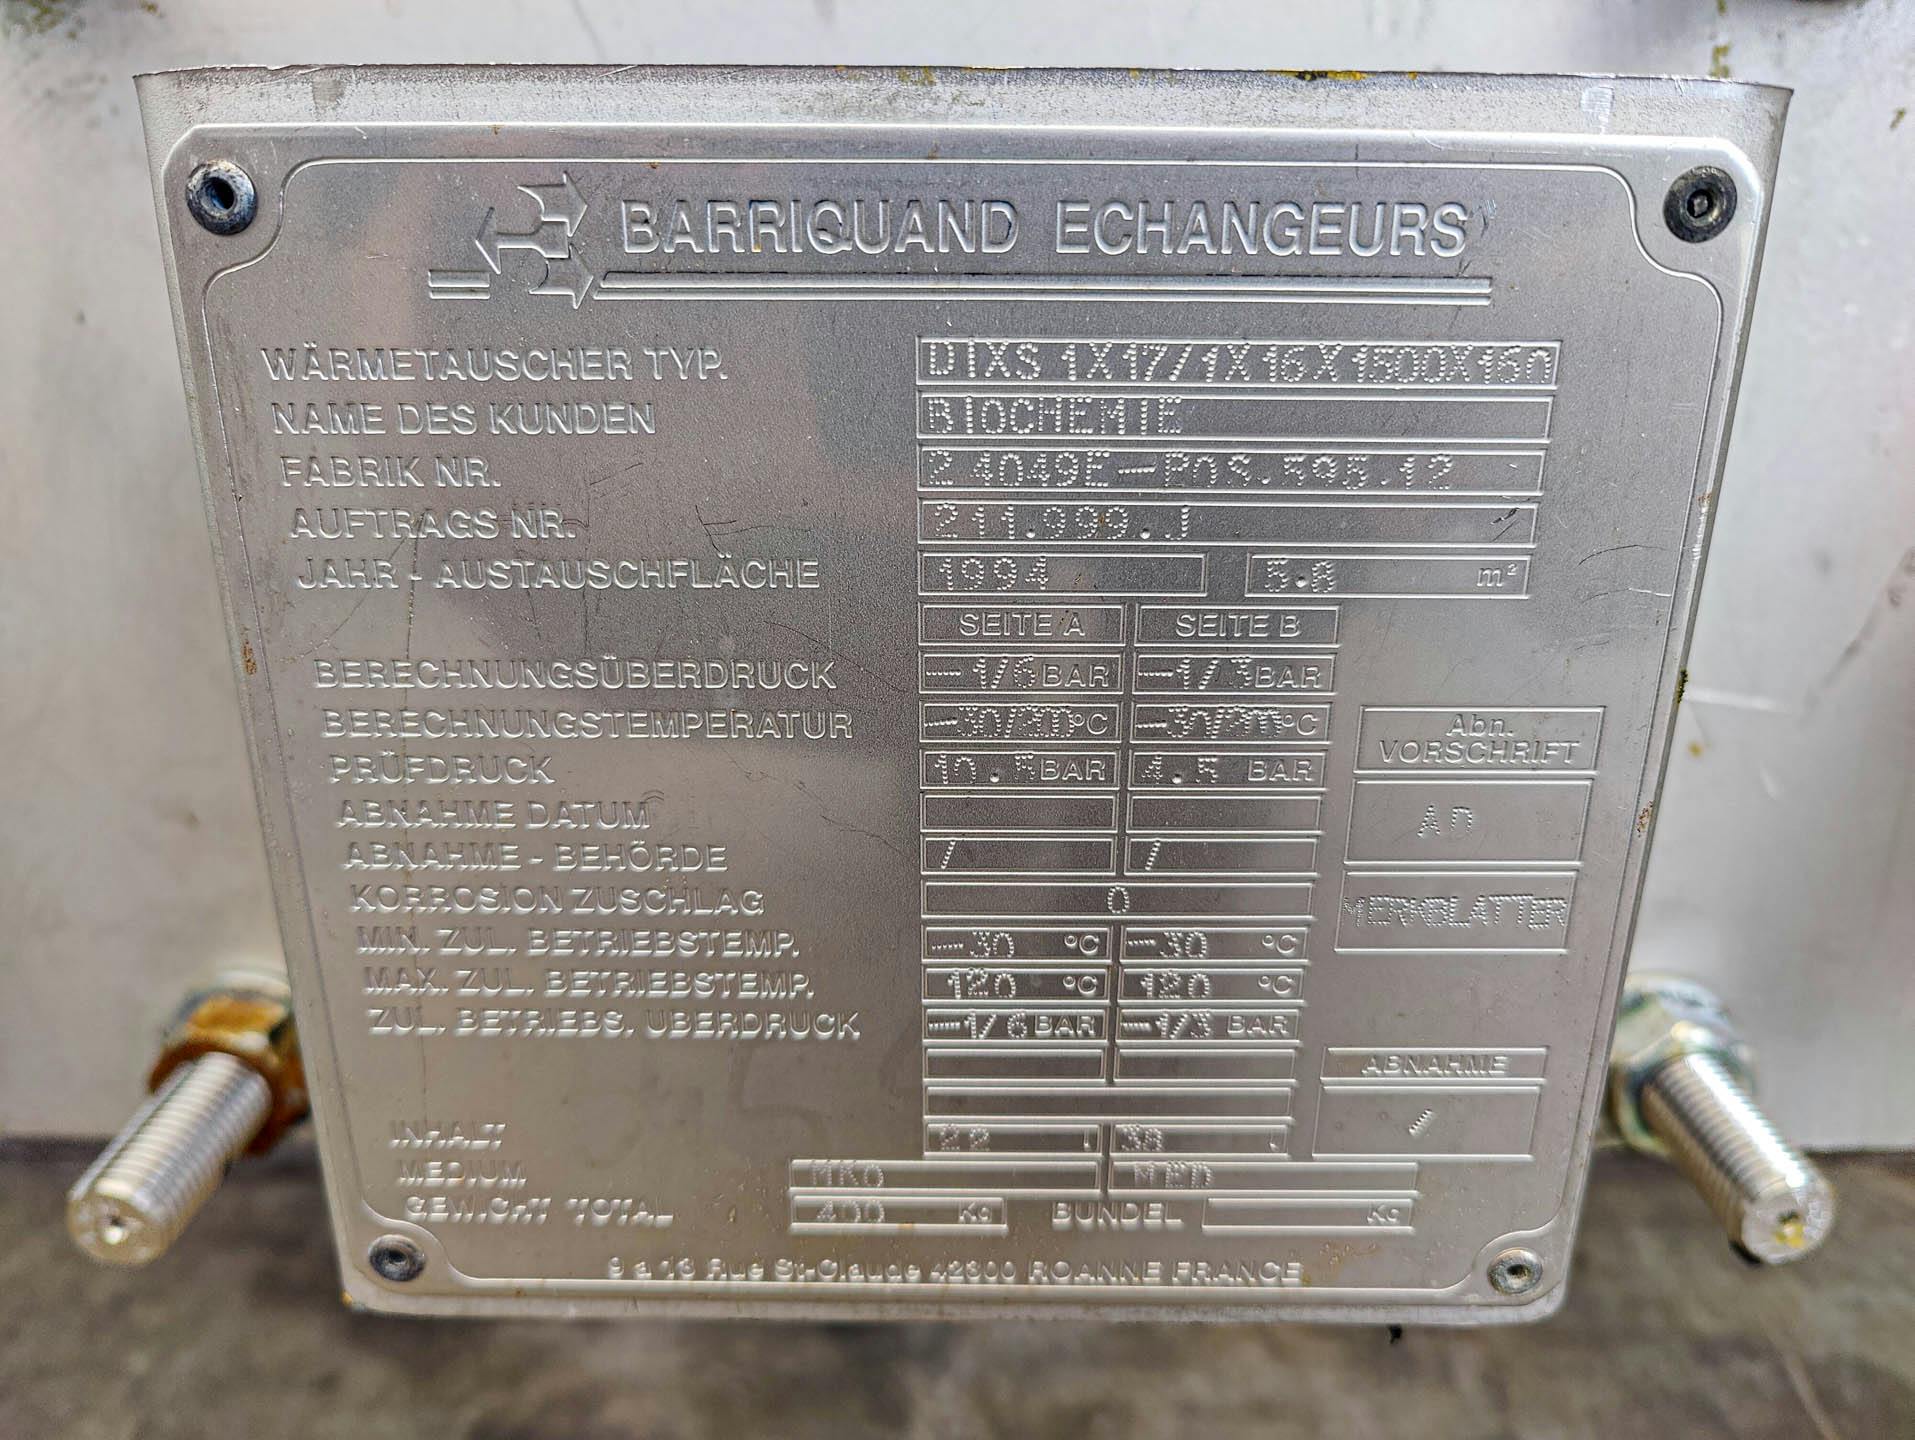 Barriquand Platular DIXS 1x17/1x16/1500/160 welded plate heat exchanger - Intercambiador de calor de placas - image 6